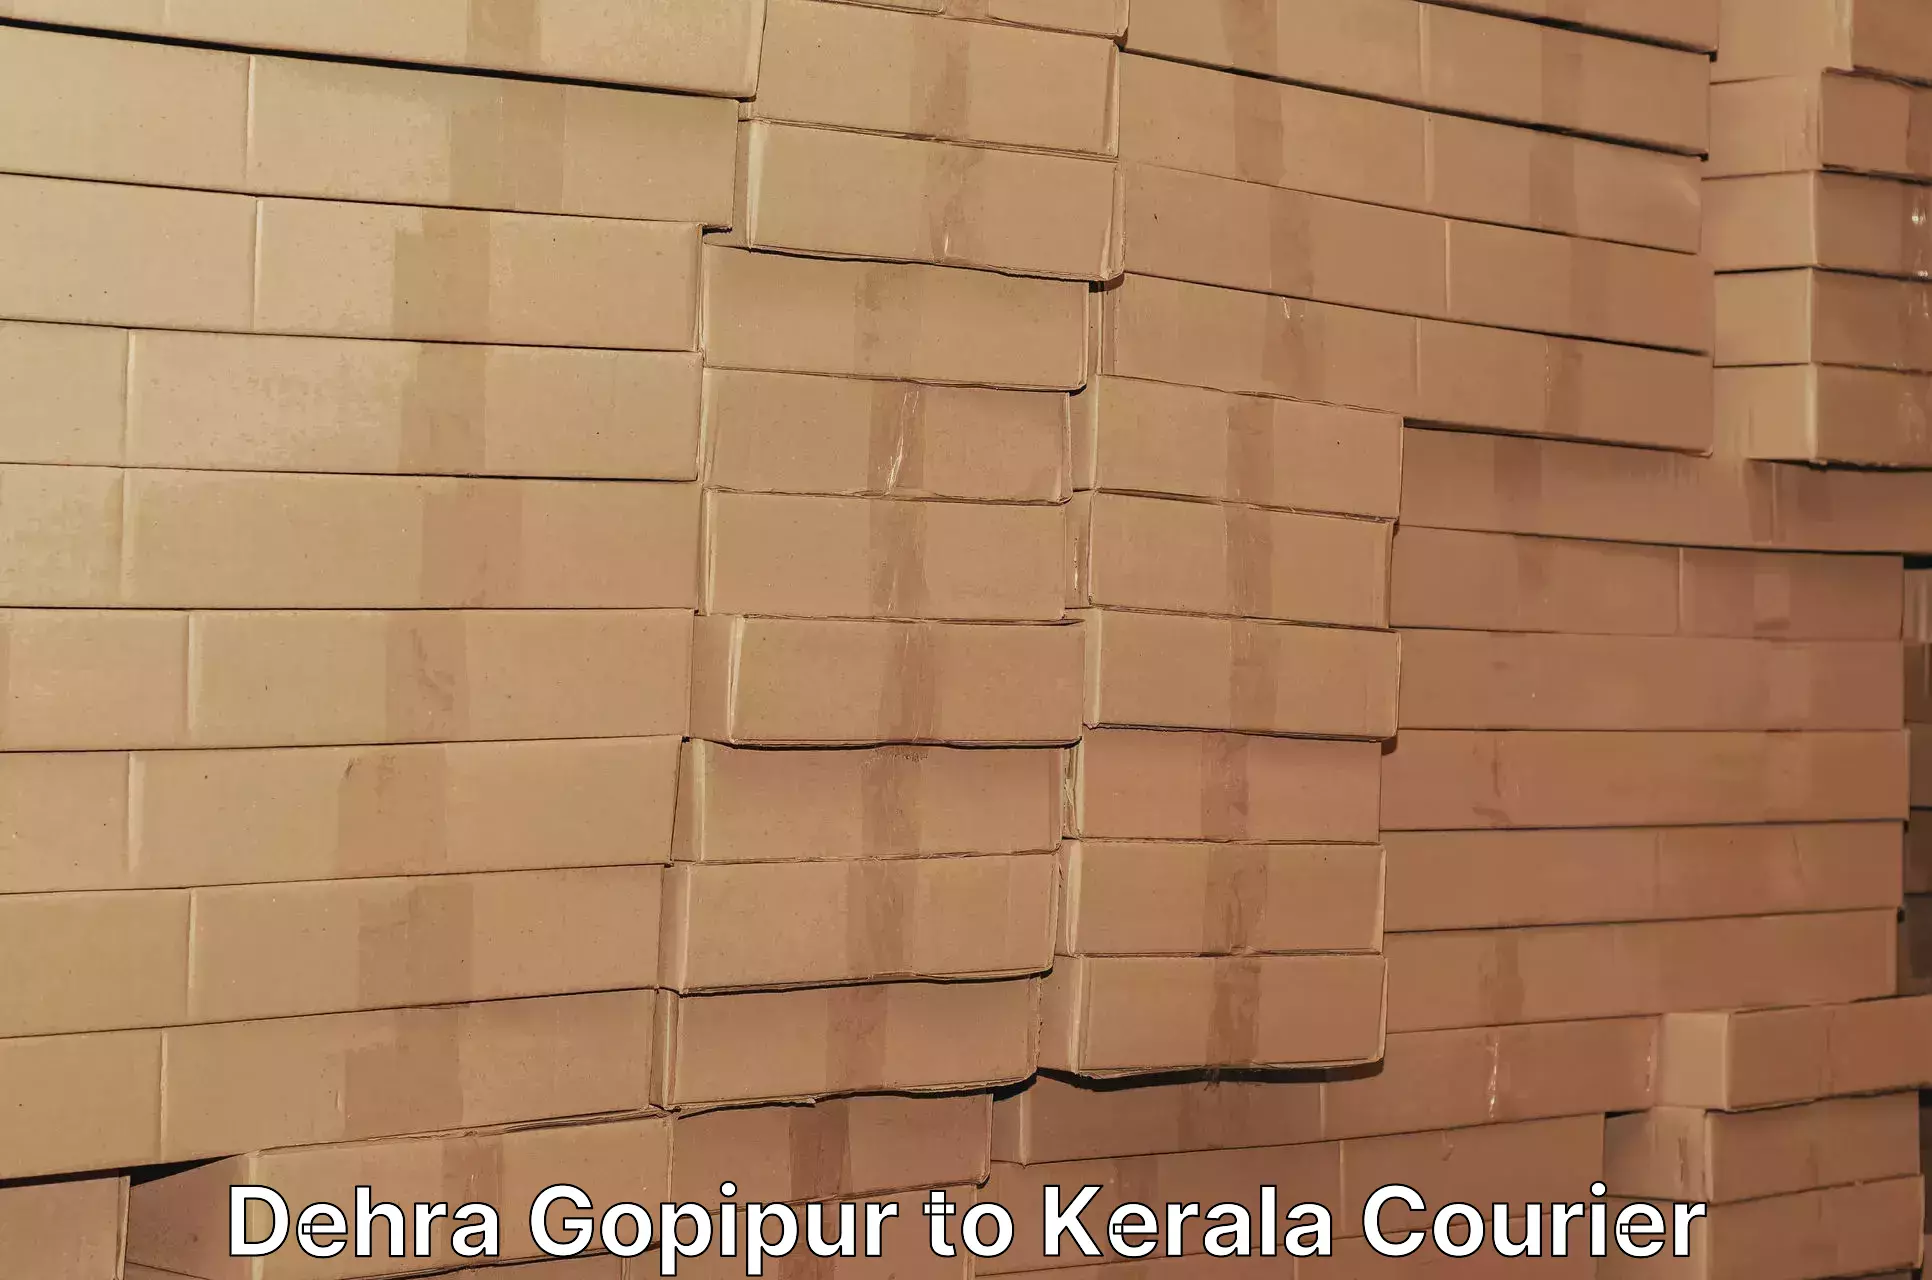 Digital courier platforms Dehra Gopipur to IIIT Kottayam